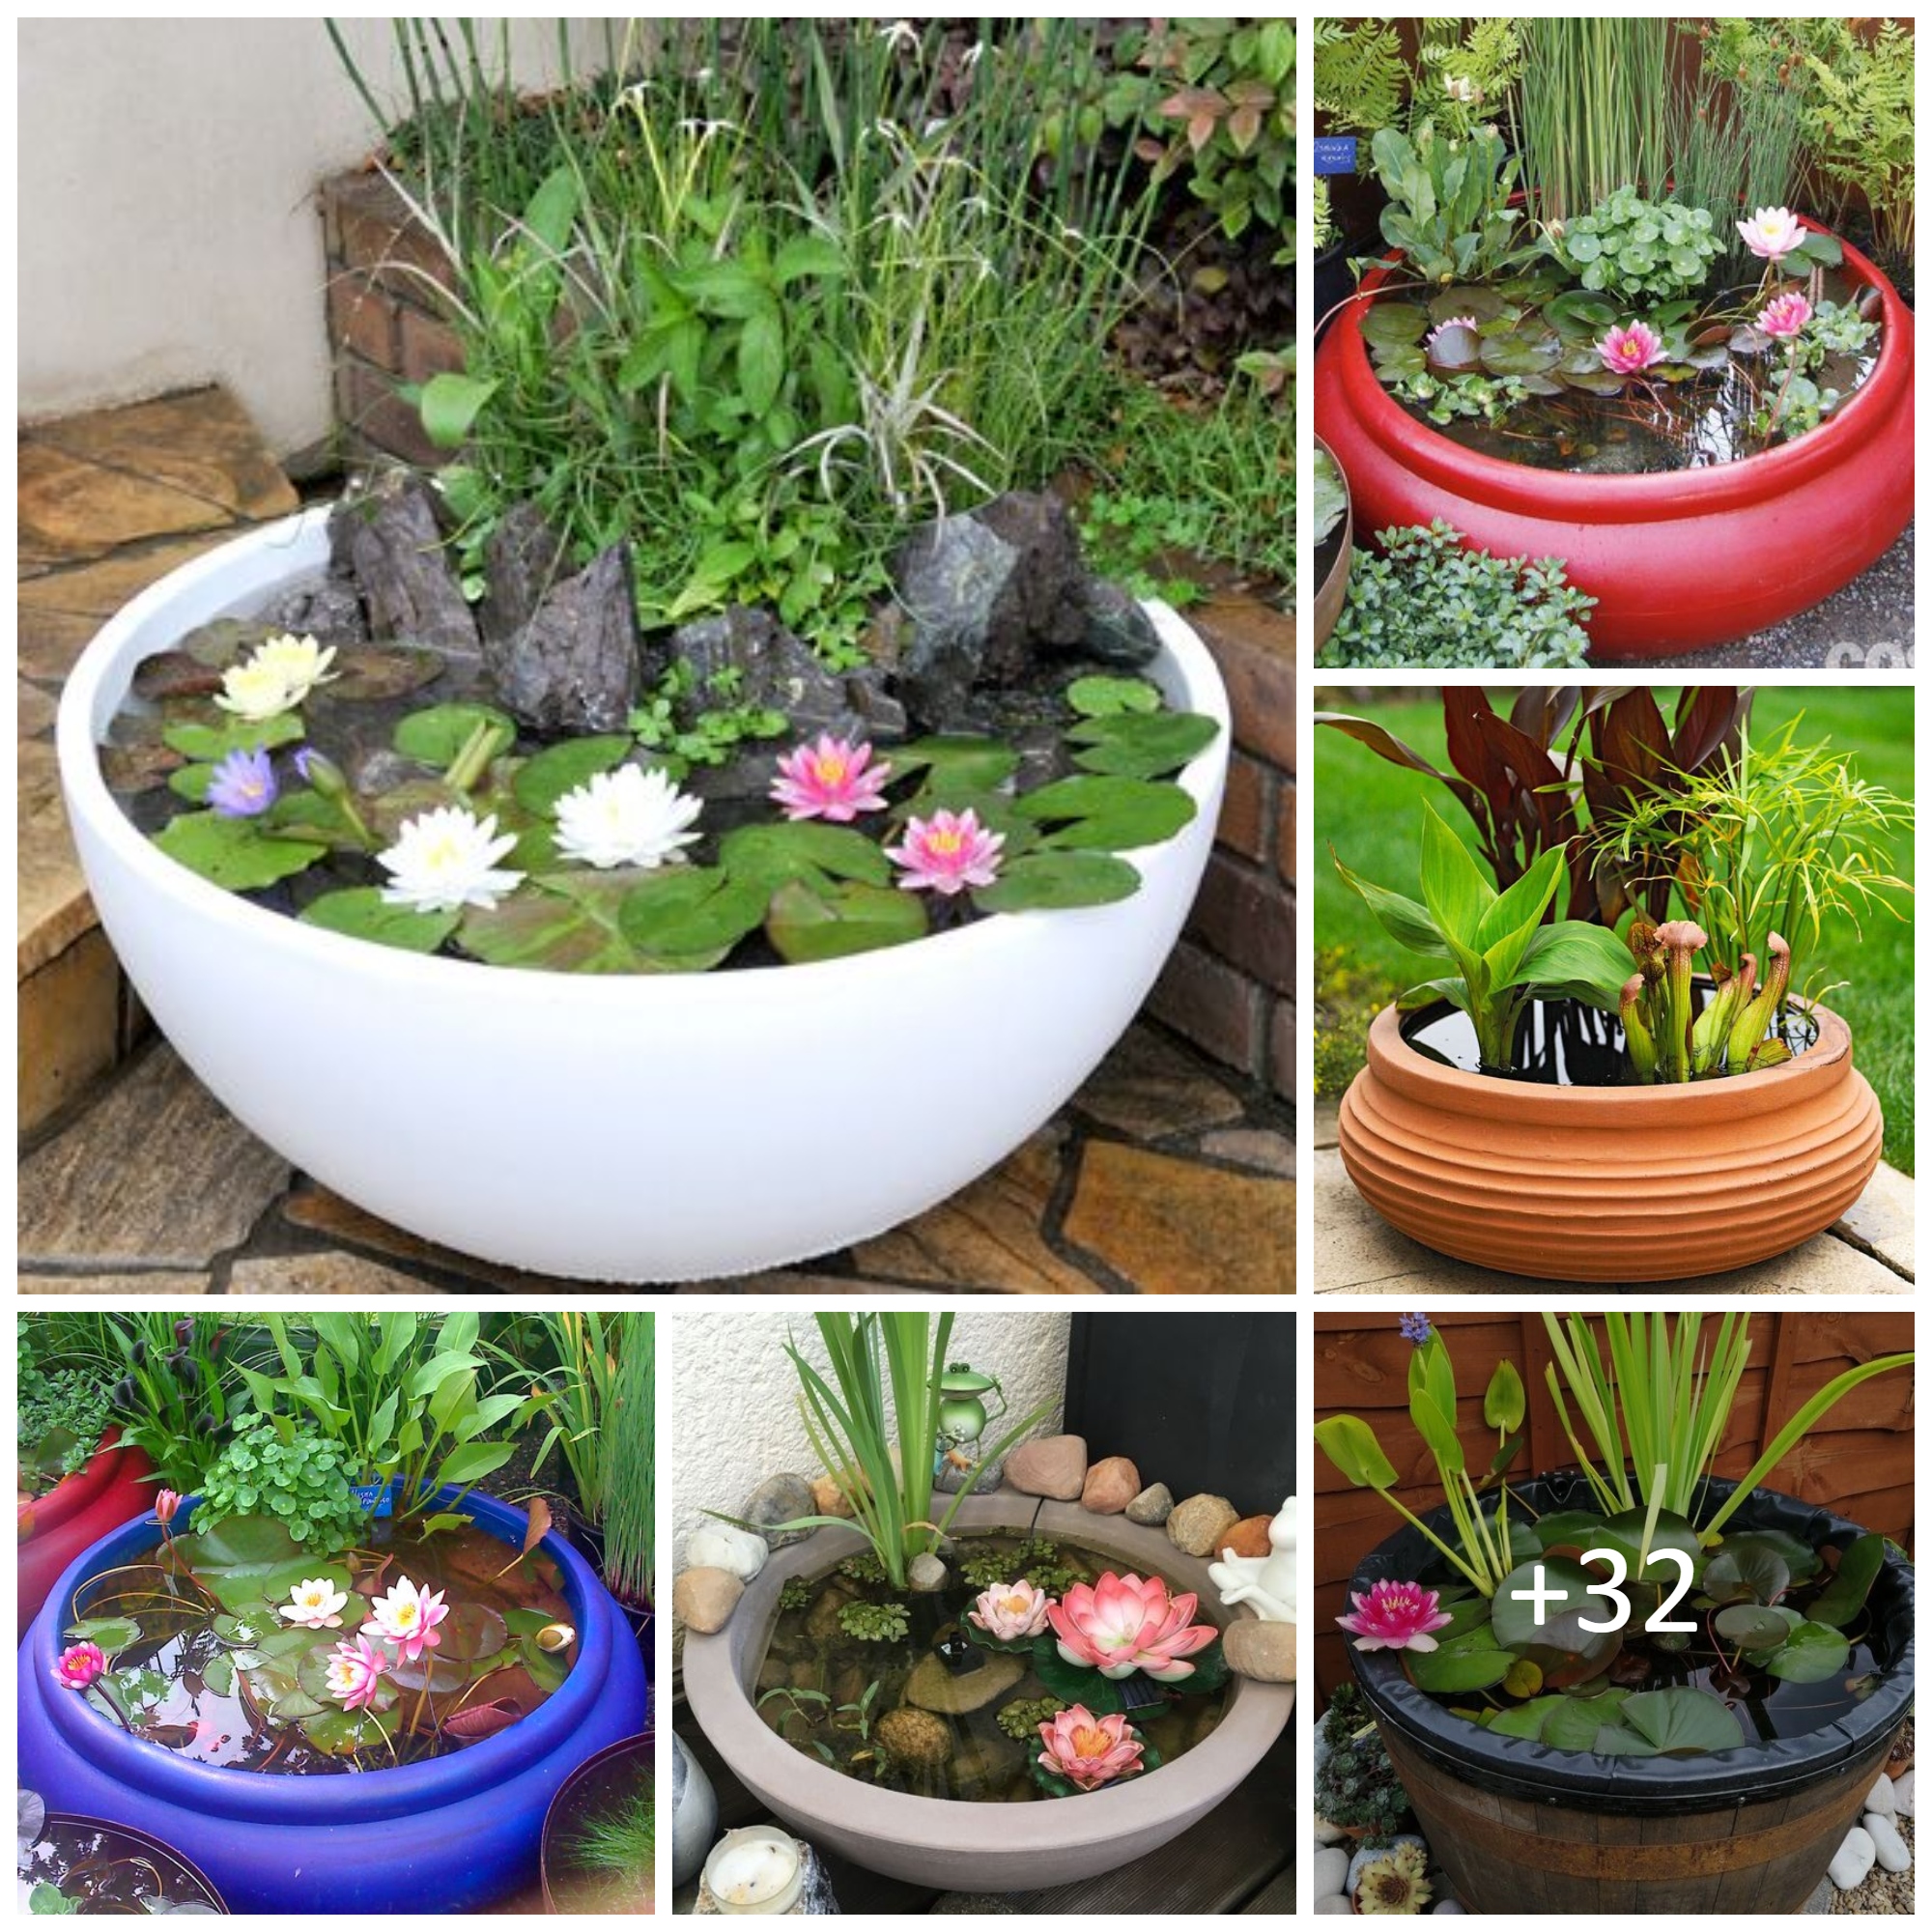 Inspiring DIY water garden ideas